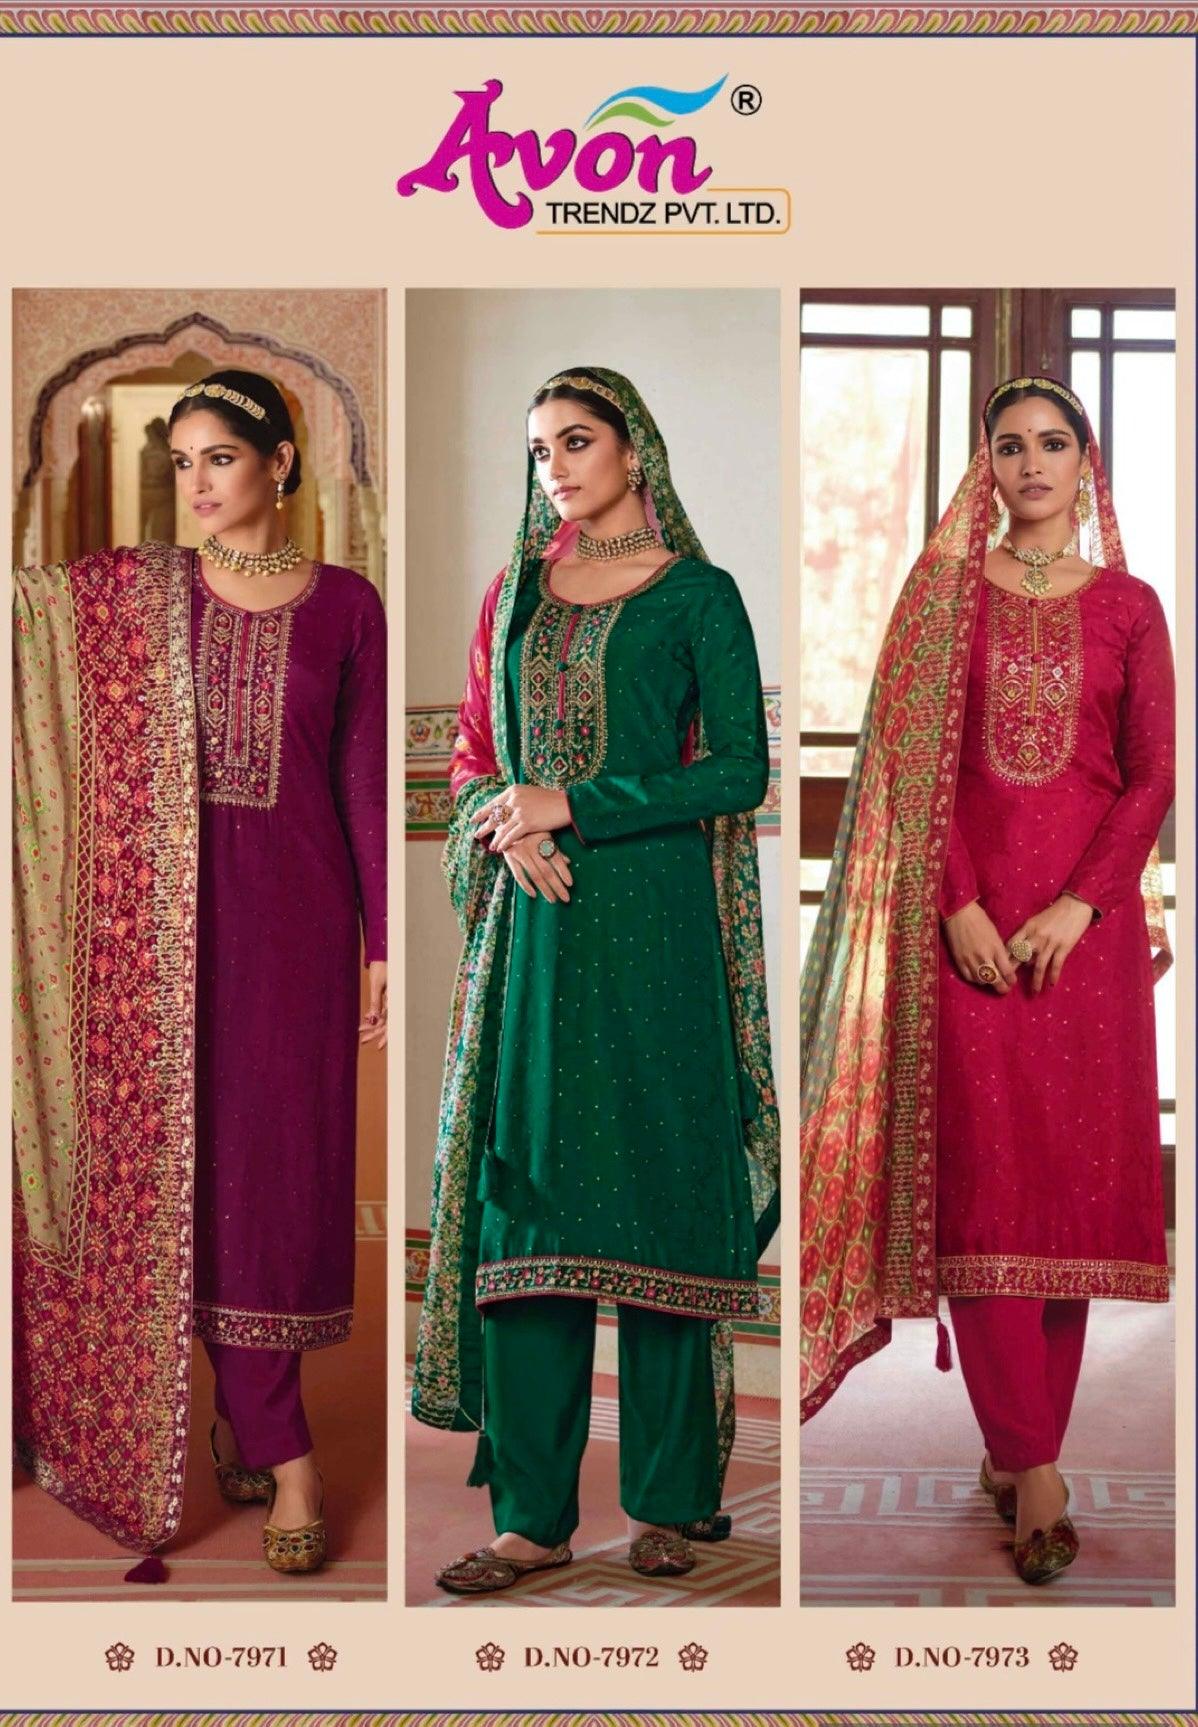 Jacquard Silk Kurta Pant with embroidery sequins Dress, Party Wear Salwar Kameez suit dress with Dupatta, M L - Diana's Fashion Factory